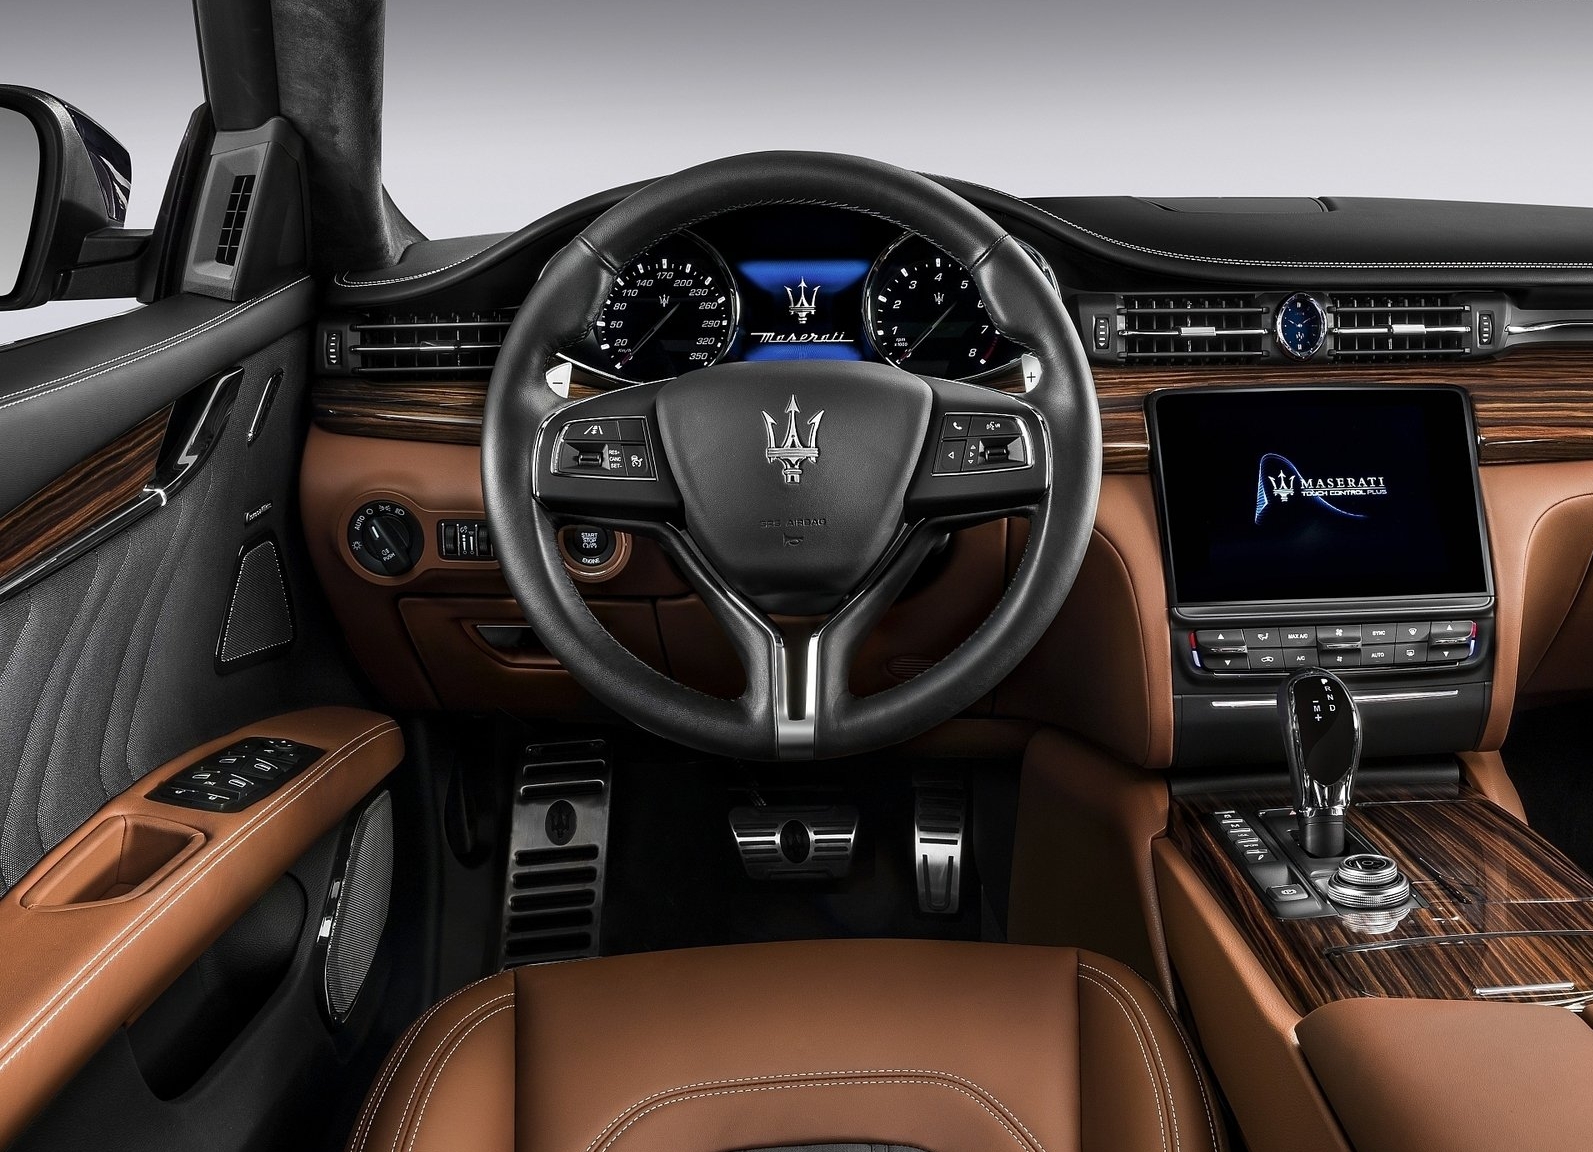 https://www.whatcar.lv/cars/Maserati/Quattroporte sedans/0ac5c3c5eb97460e1a952e2e761c4ce8.jpg